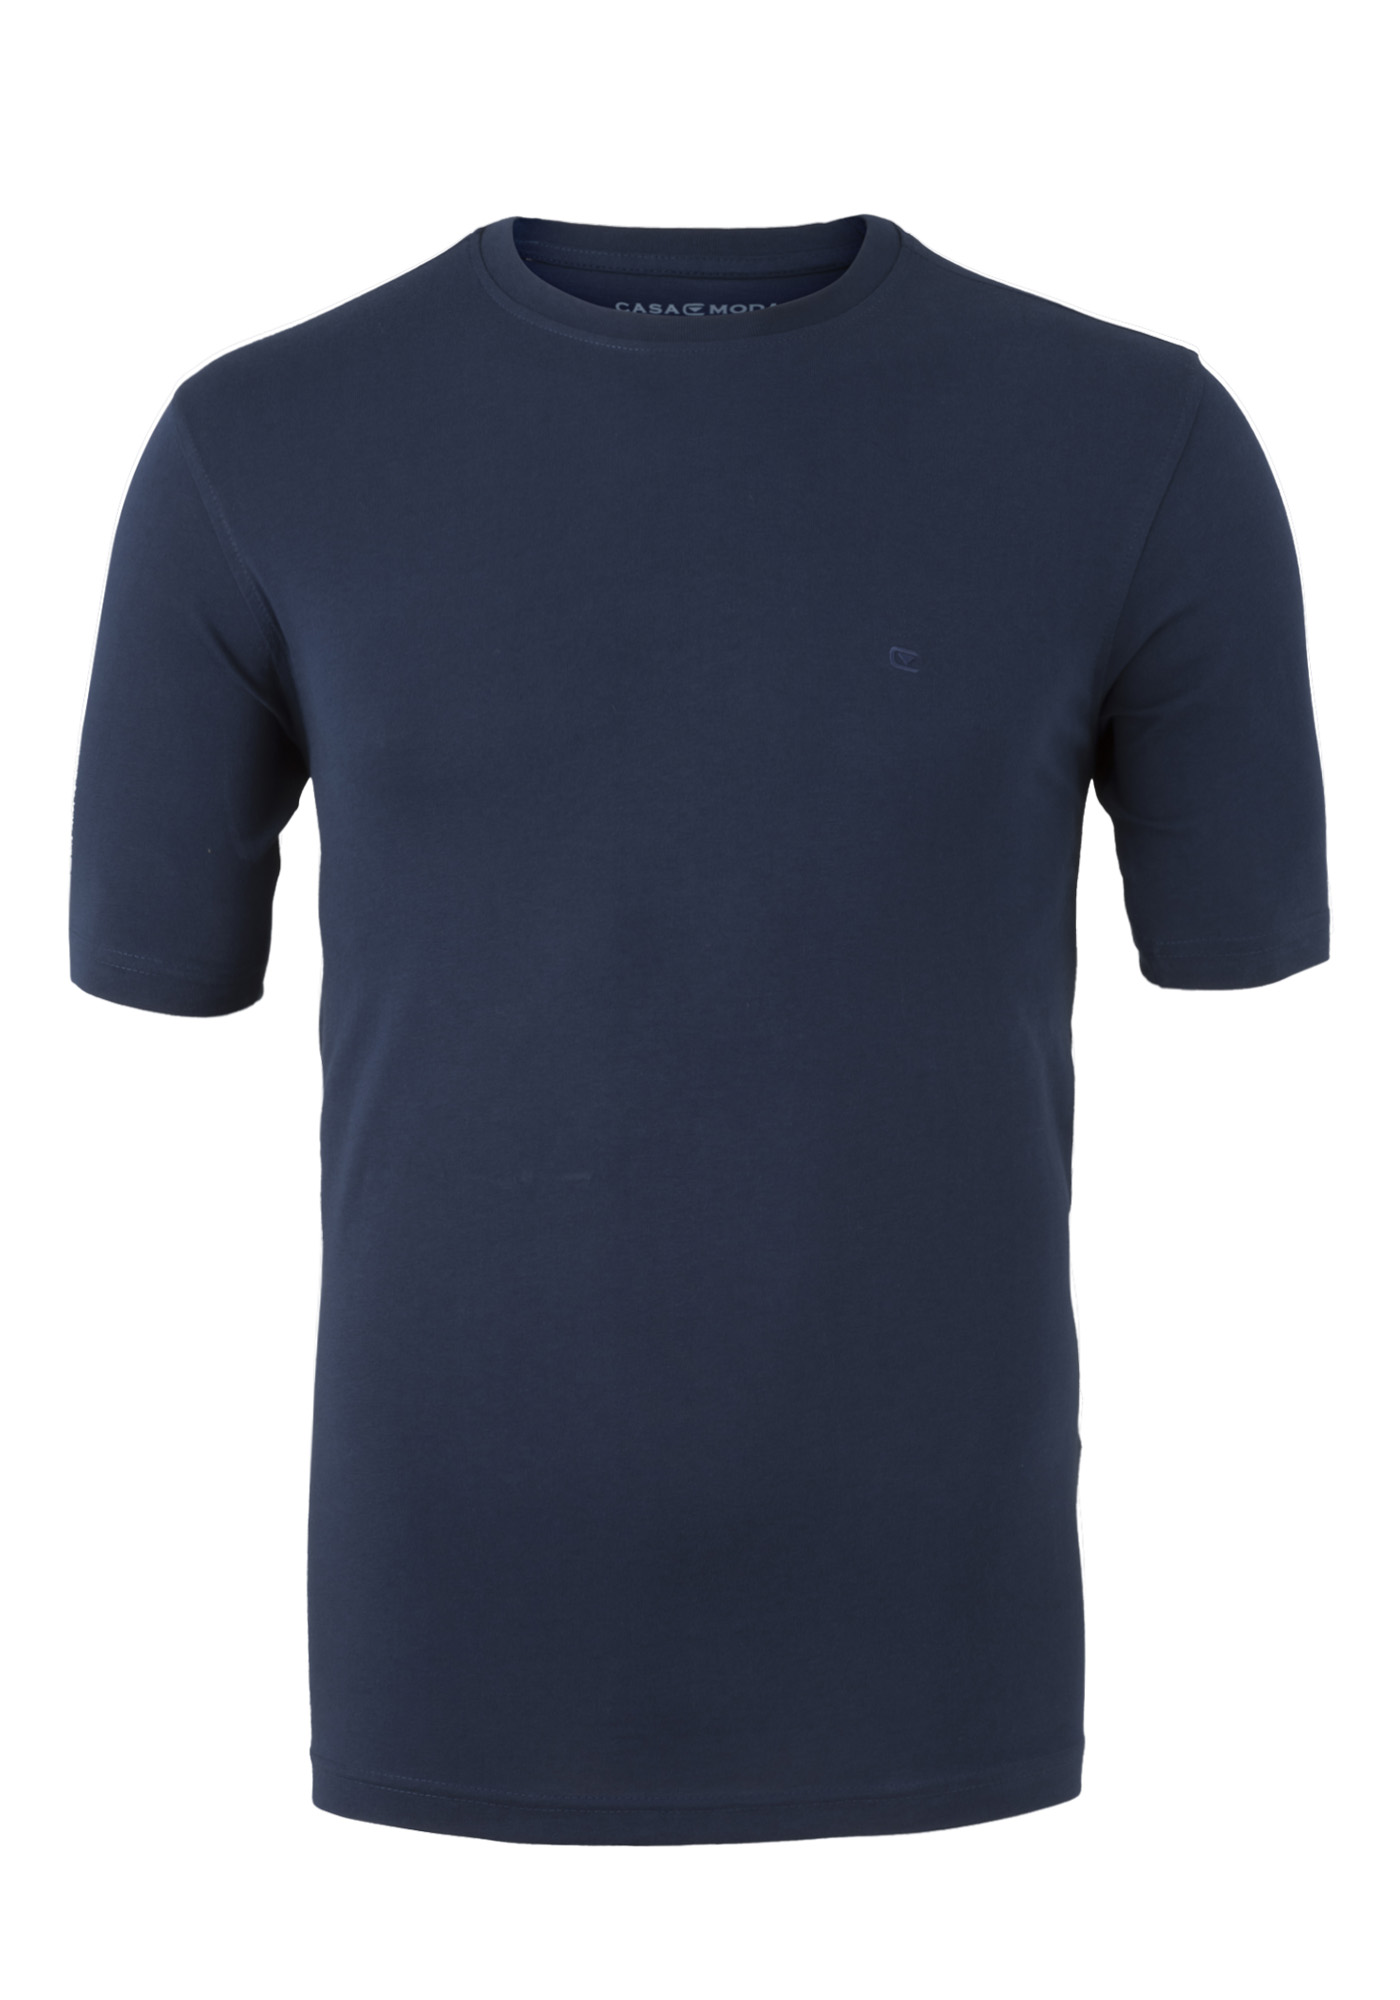 ervaring veiligheid Overtollig Casa Moda T-shirt, O-neck, marine blauw- Gratis bezorgd